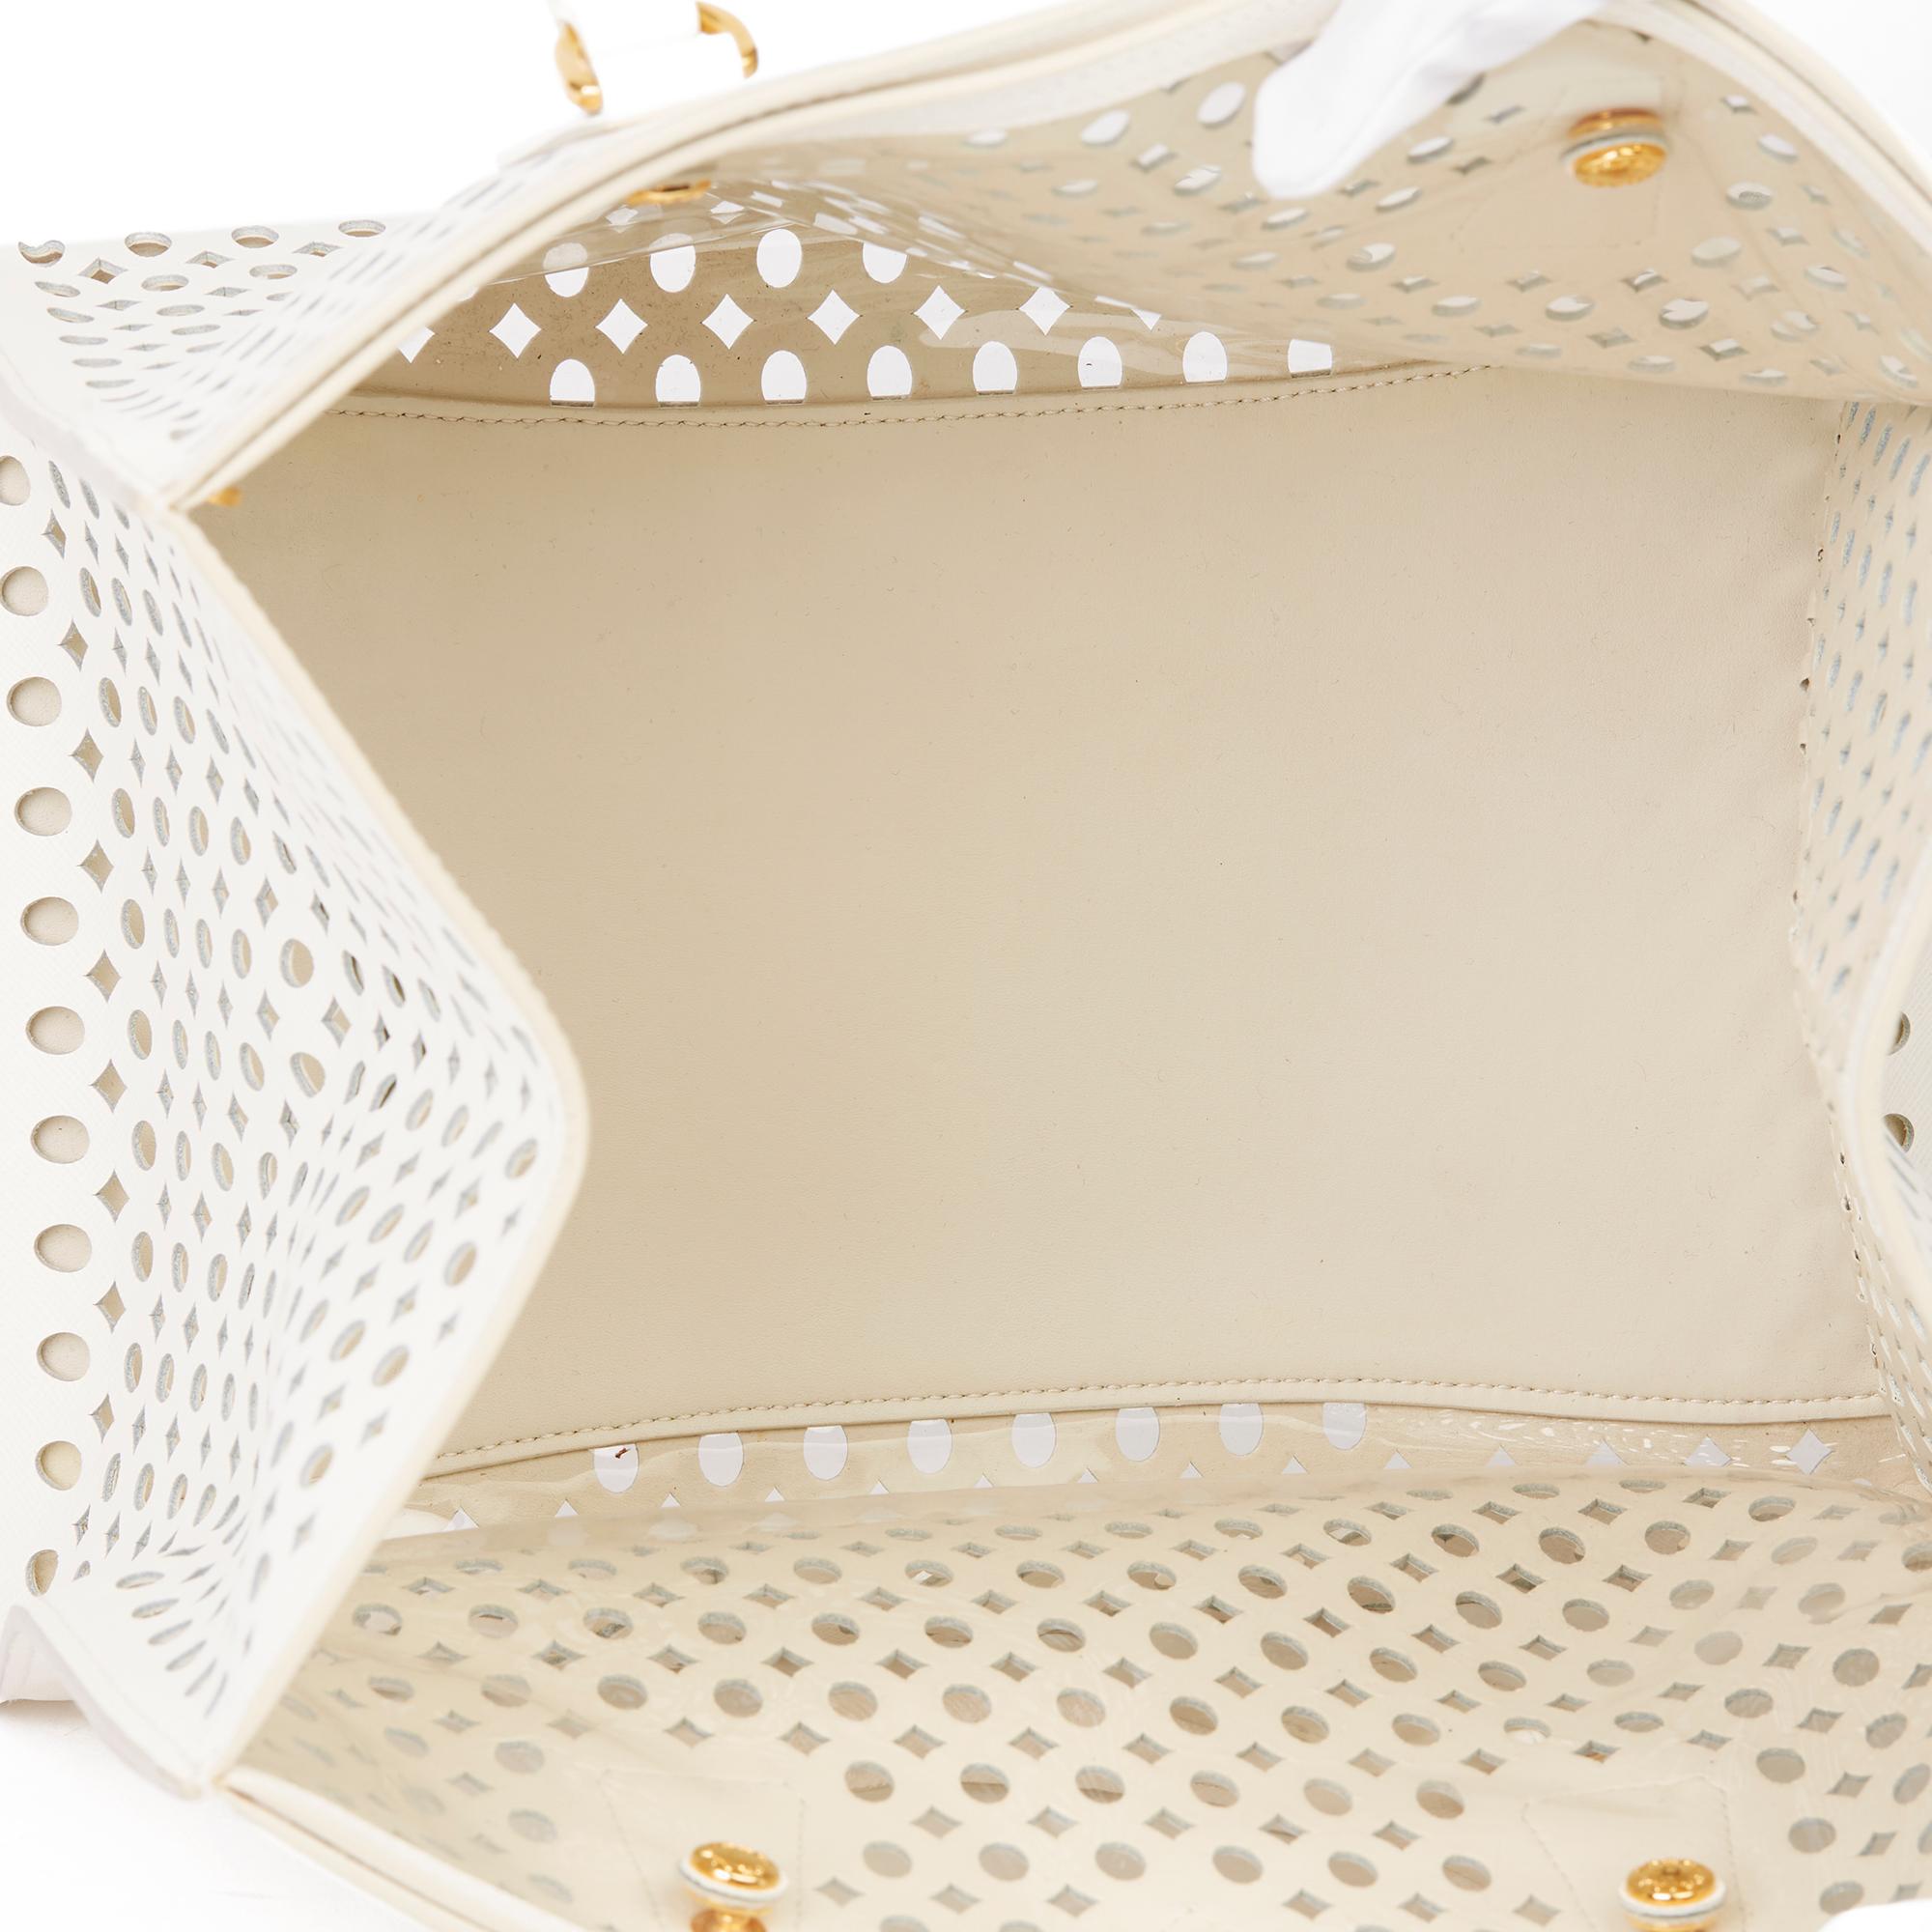 2013 Prada White Perforated Saffiano Leather & PVC Fori Tote 3